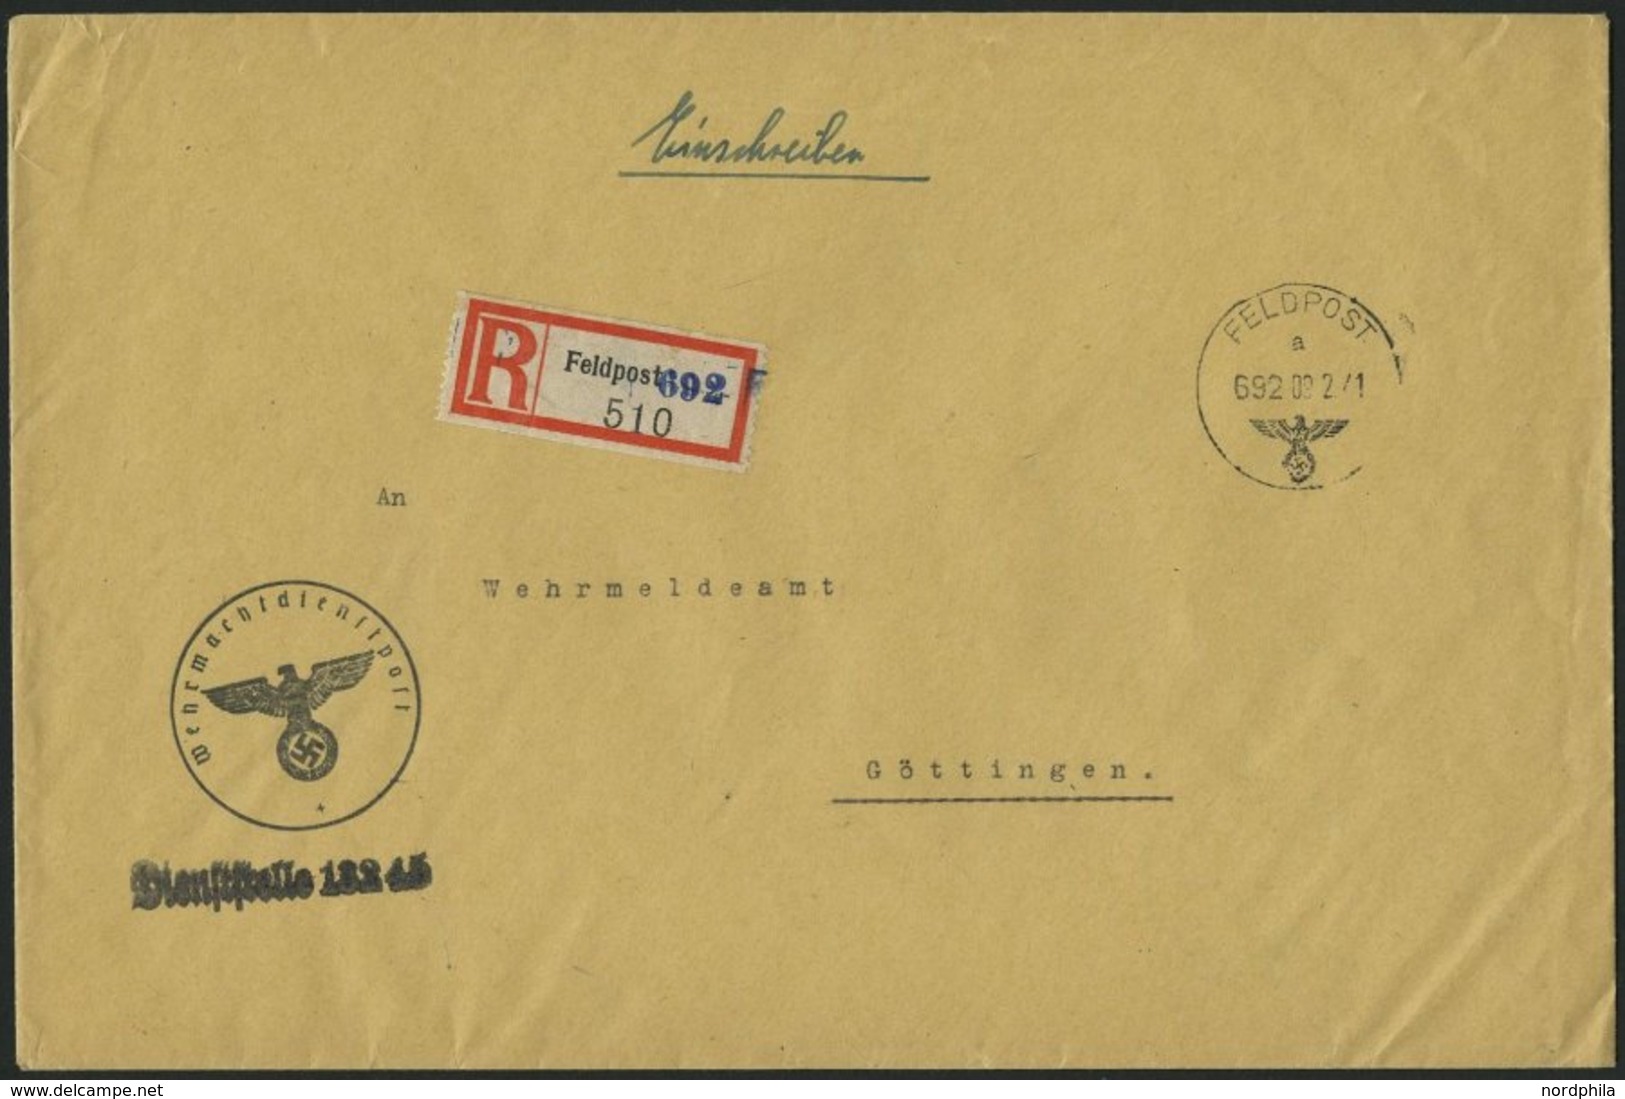 FELDPOST II. WK BELEGE 13 Verschiedene Feldpost-Einschreibbriefe, Pracht - Bezetting 1938-45